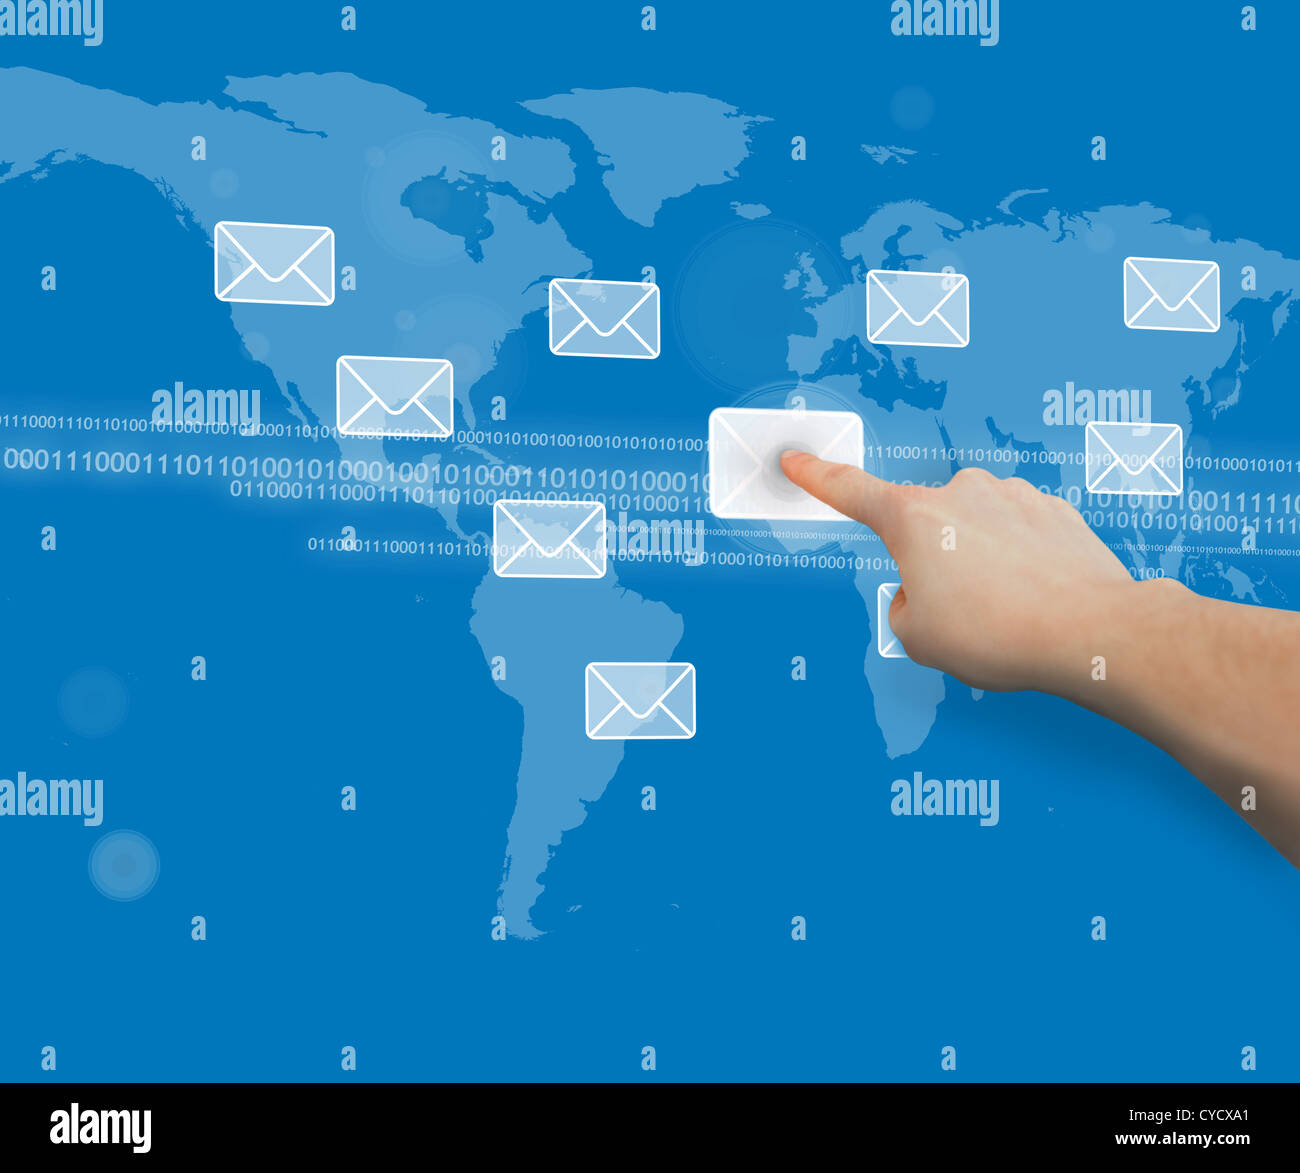 Finger touching message symbol on world map interface Stock Photo